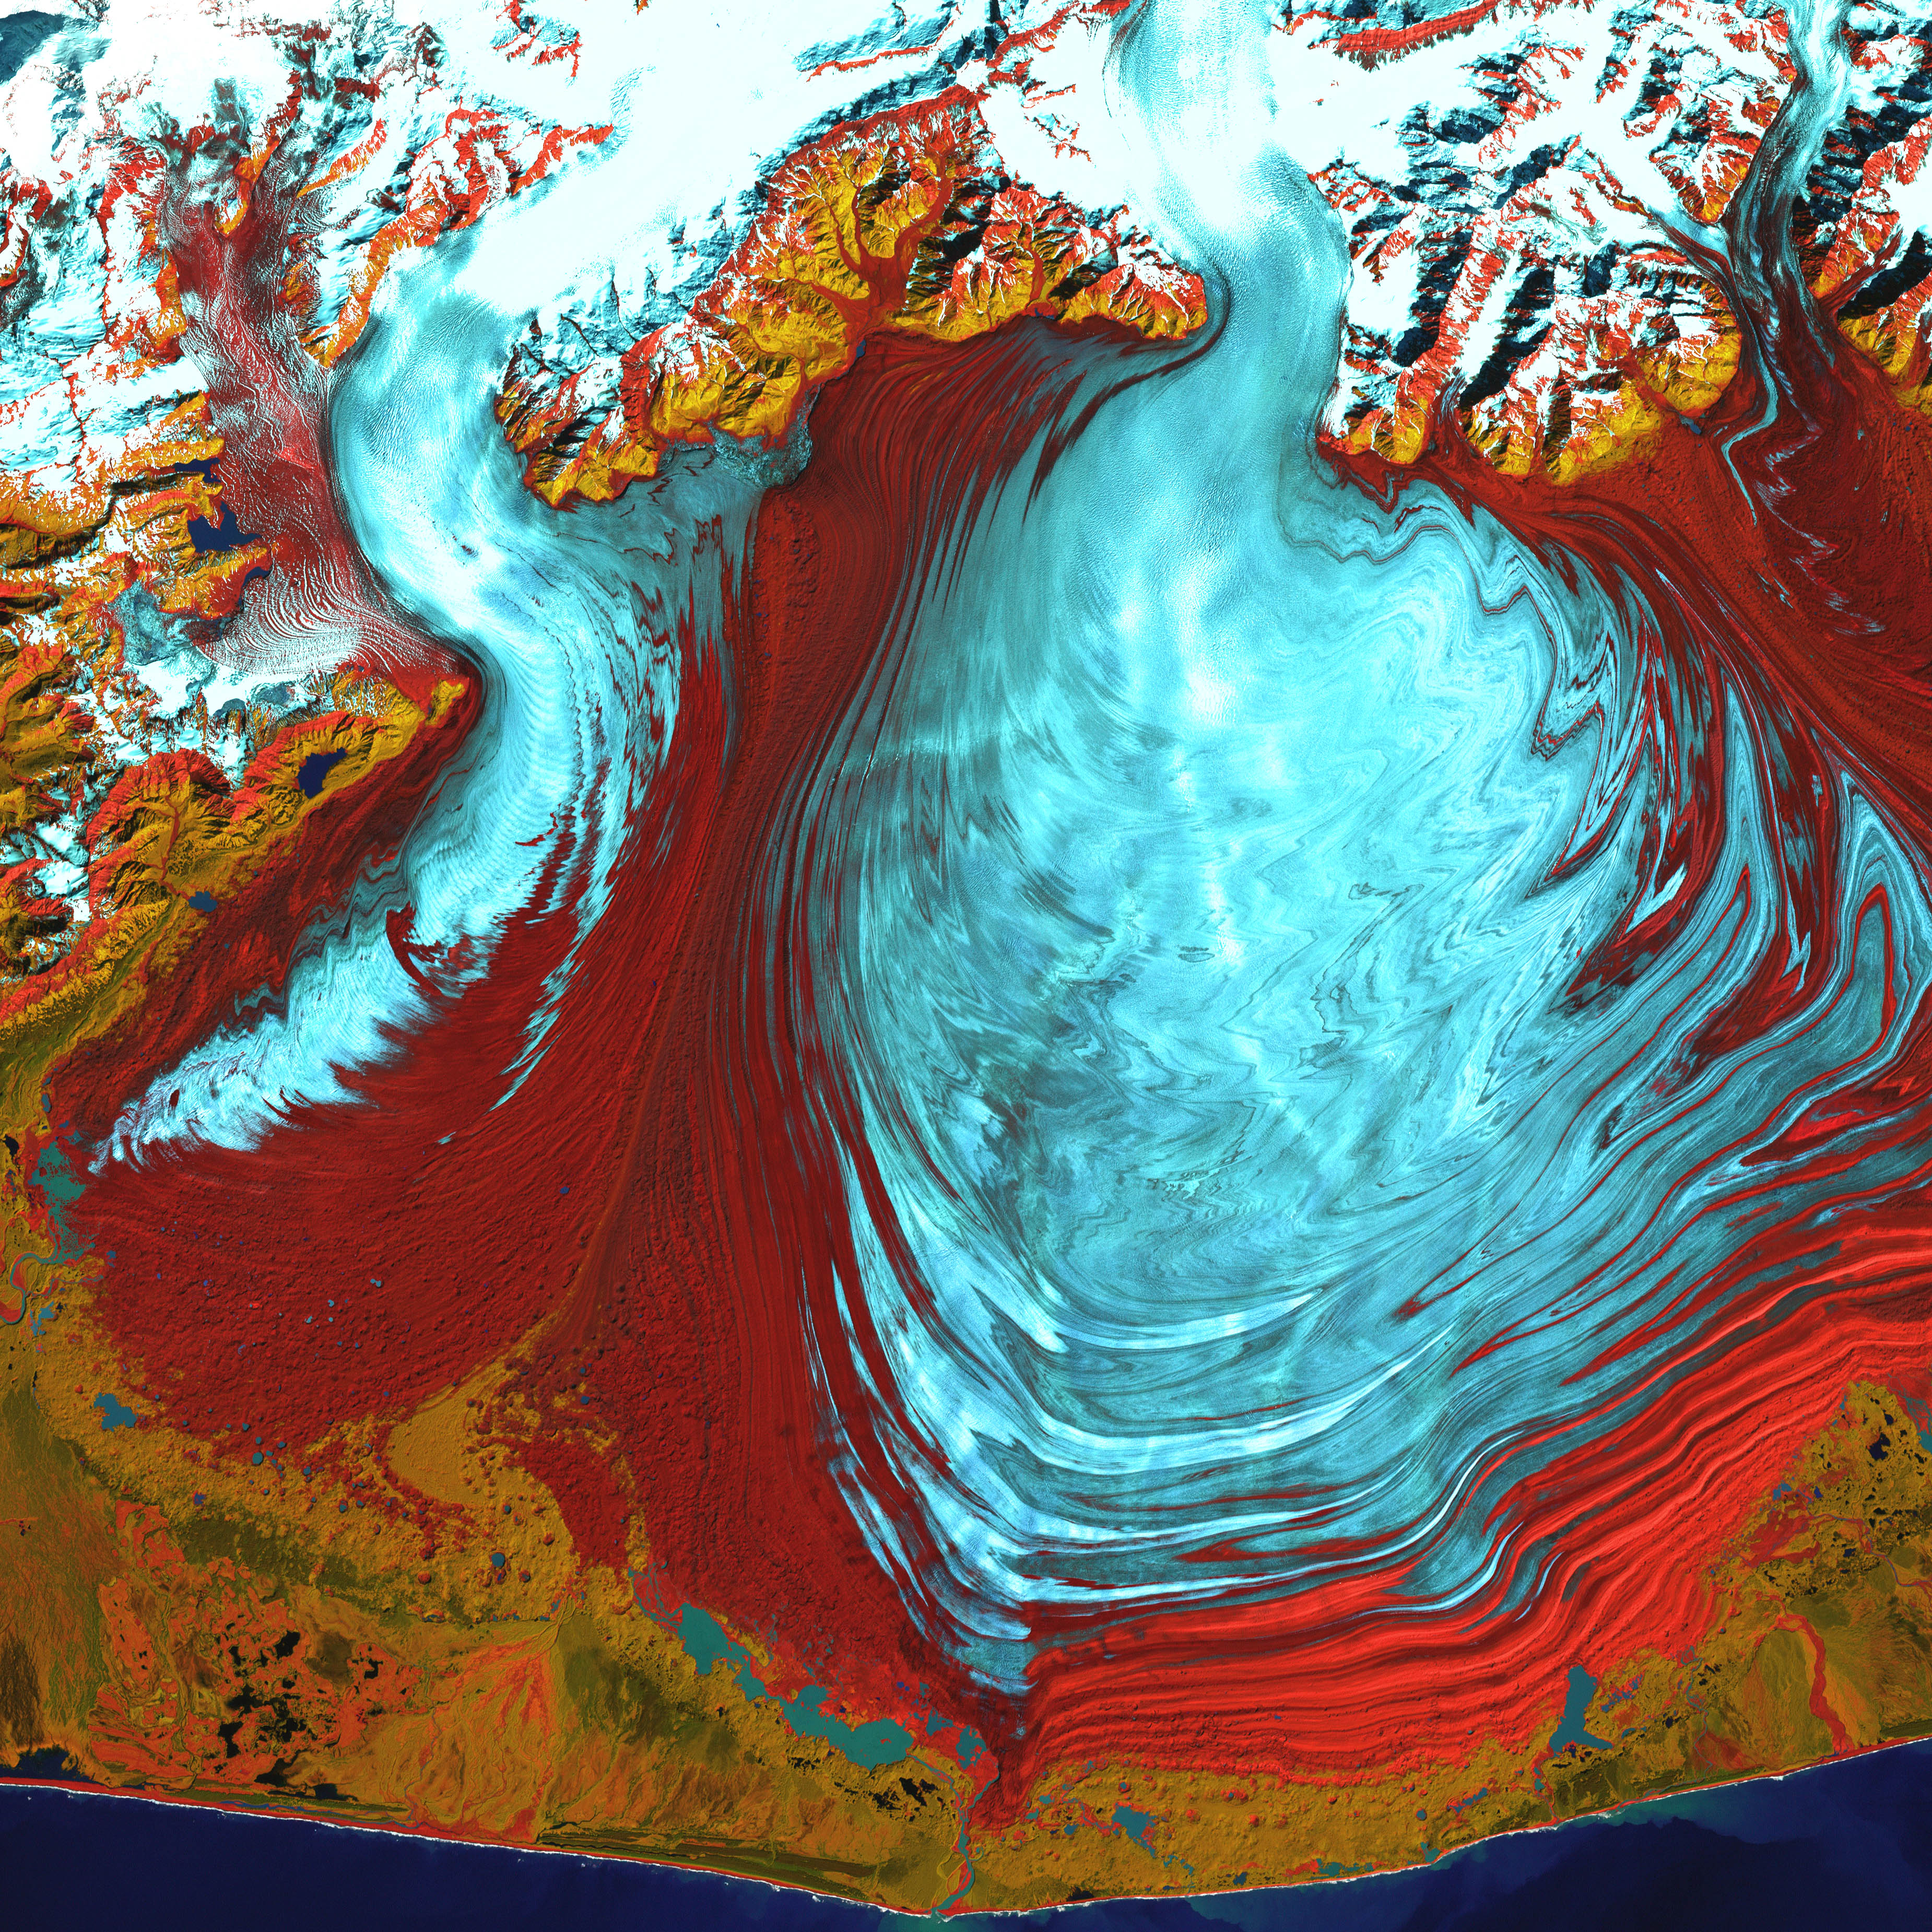 Malaspina Glacier, Alaska - related image preview